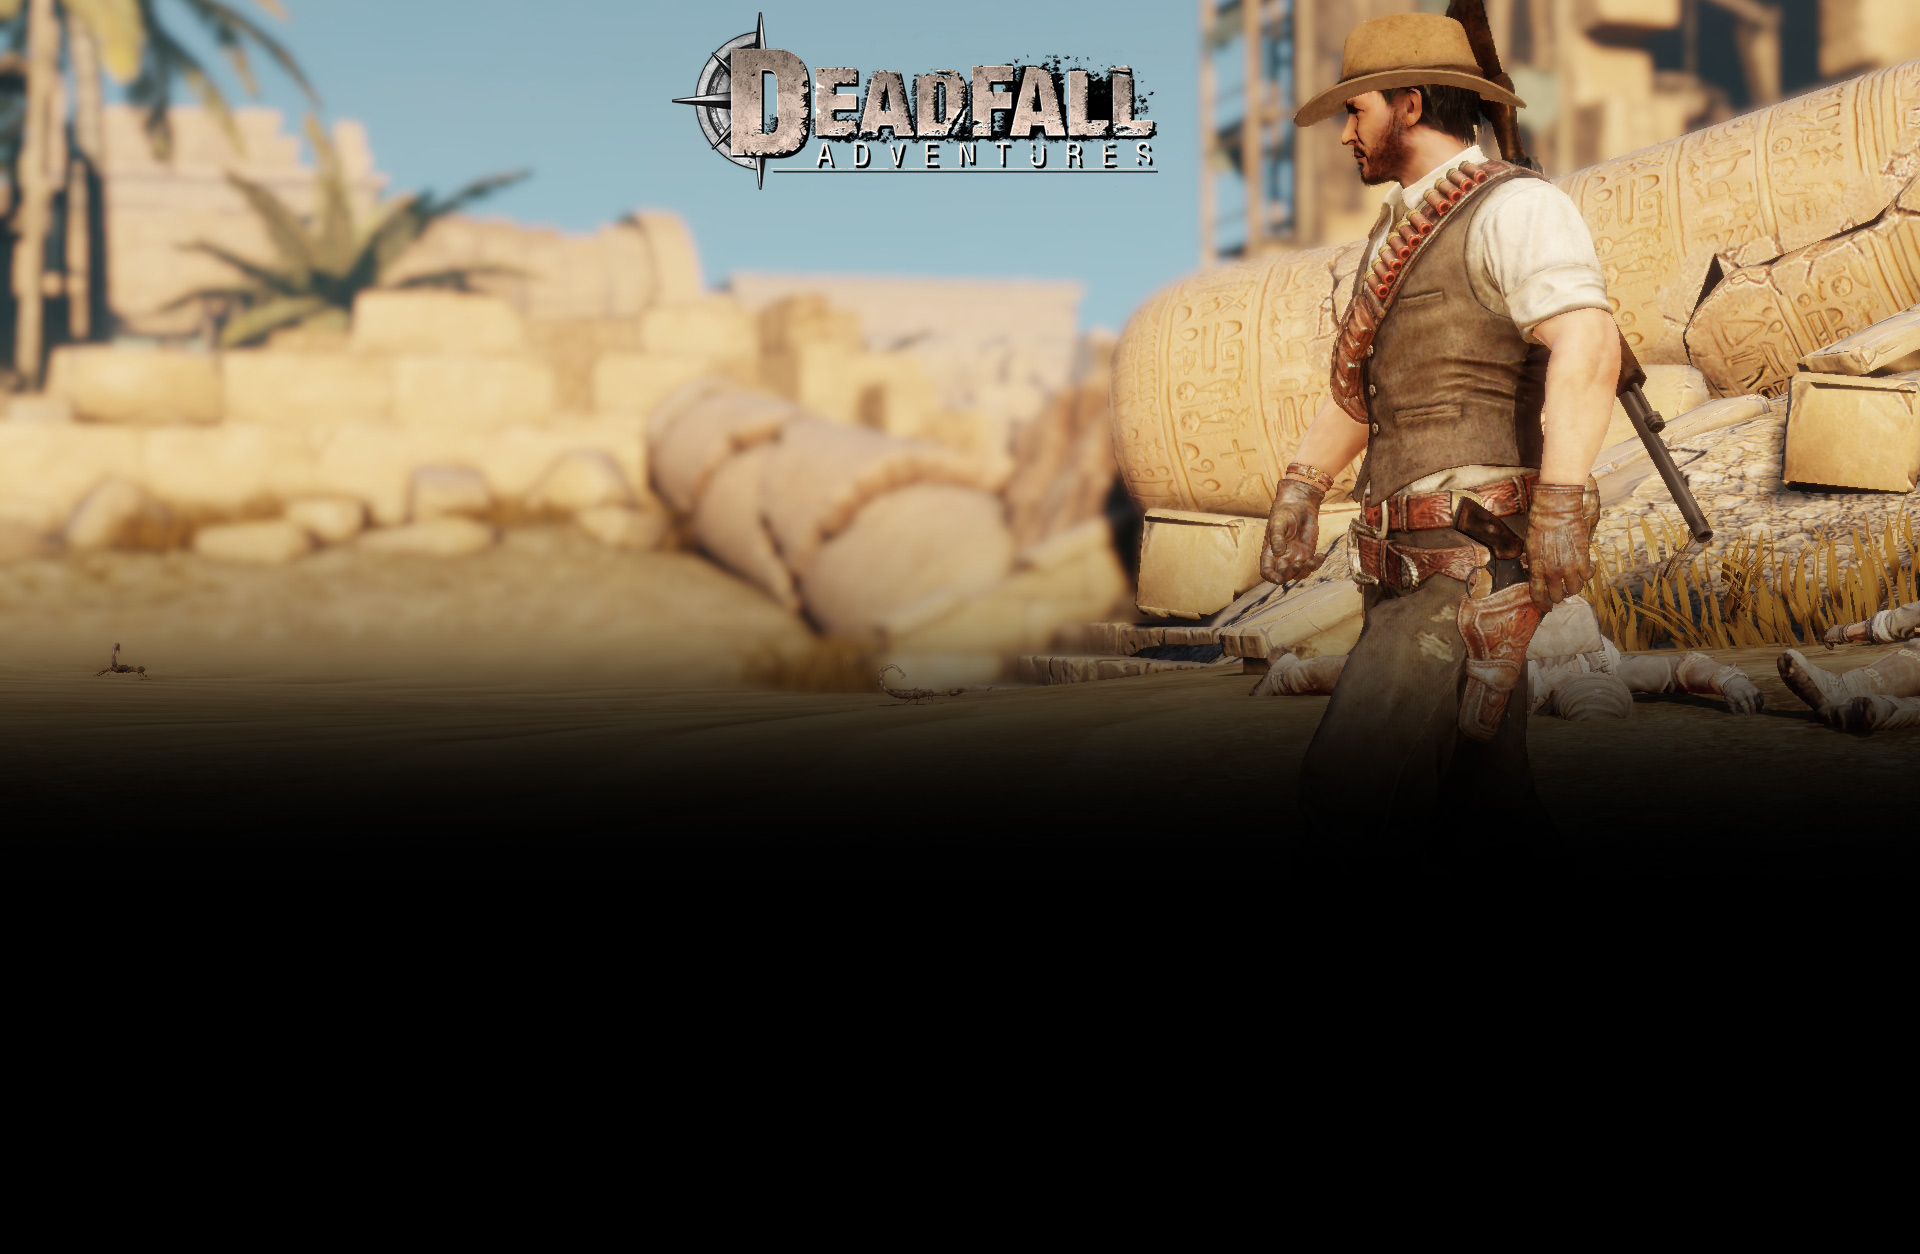 Deadfall Adventures - Digital Deluxe Edition